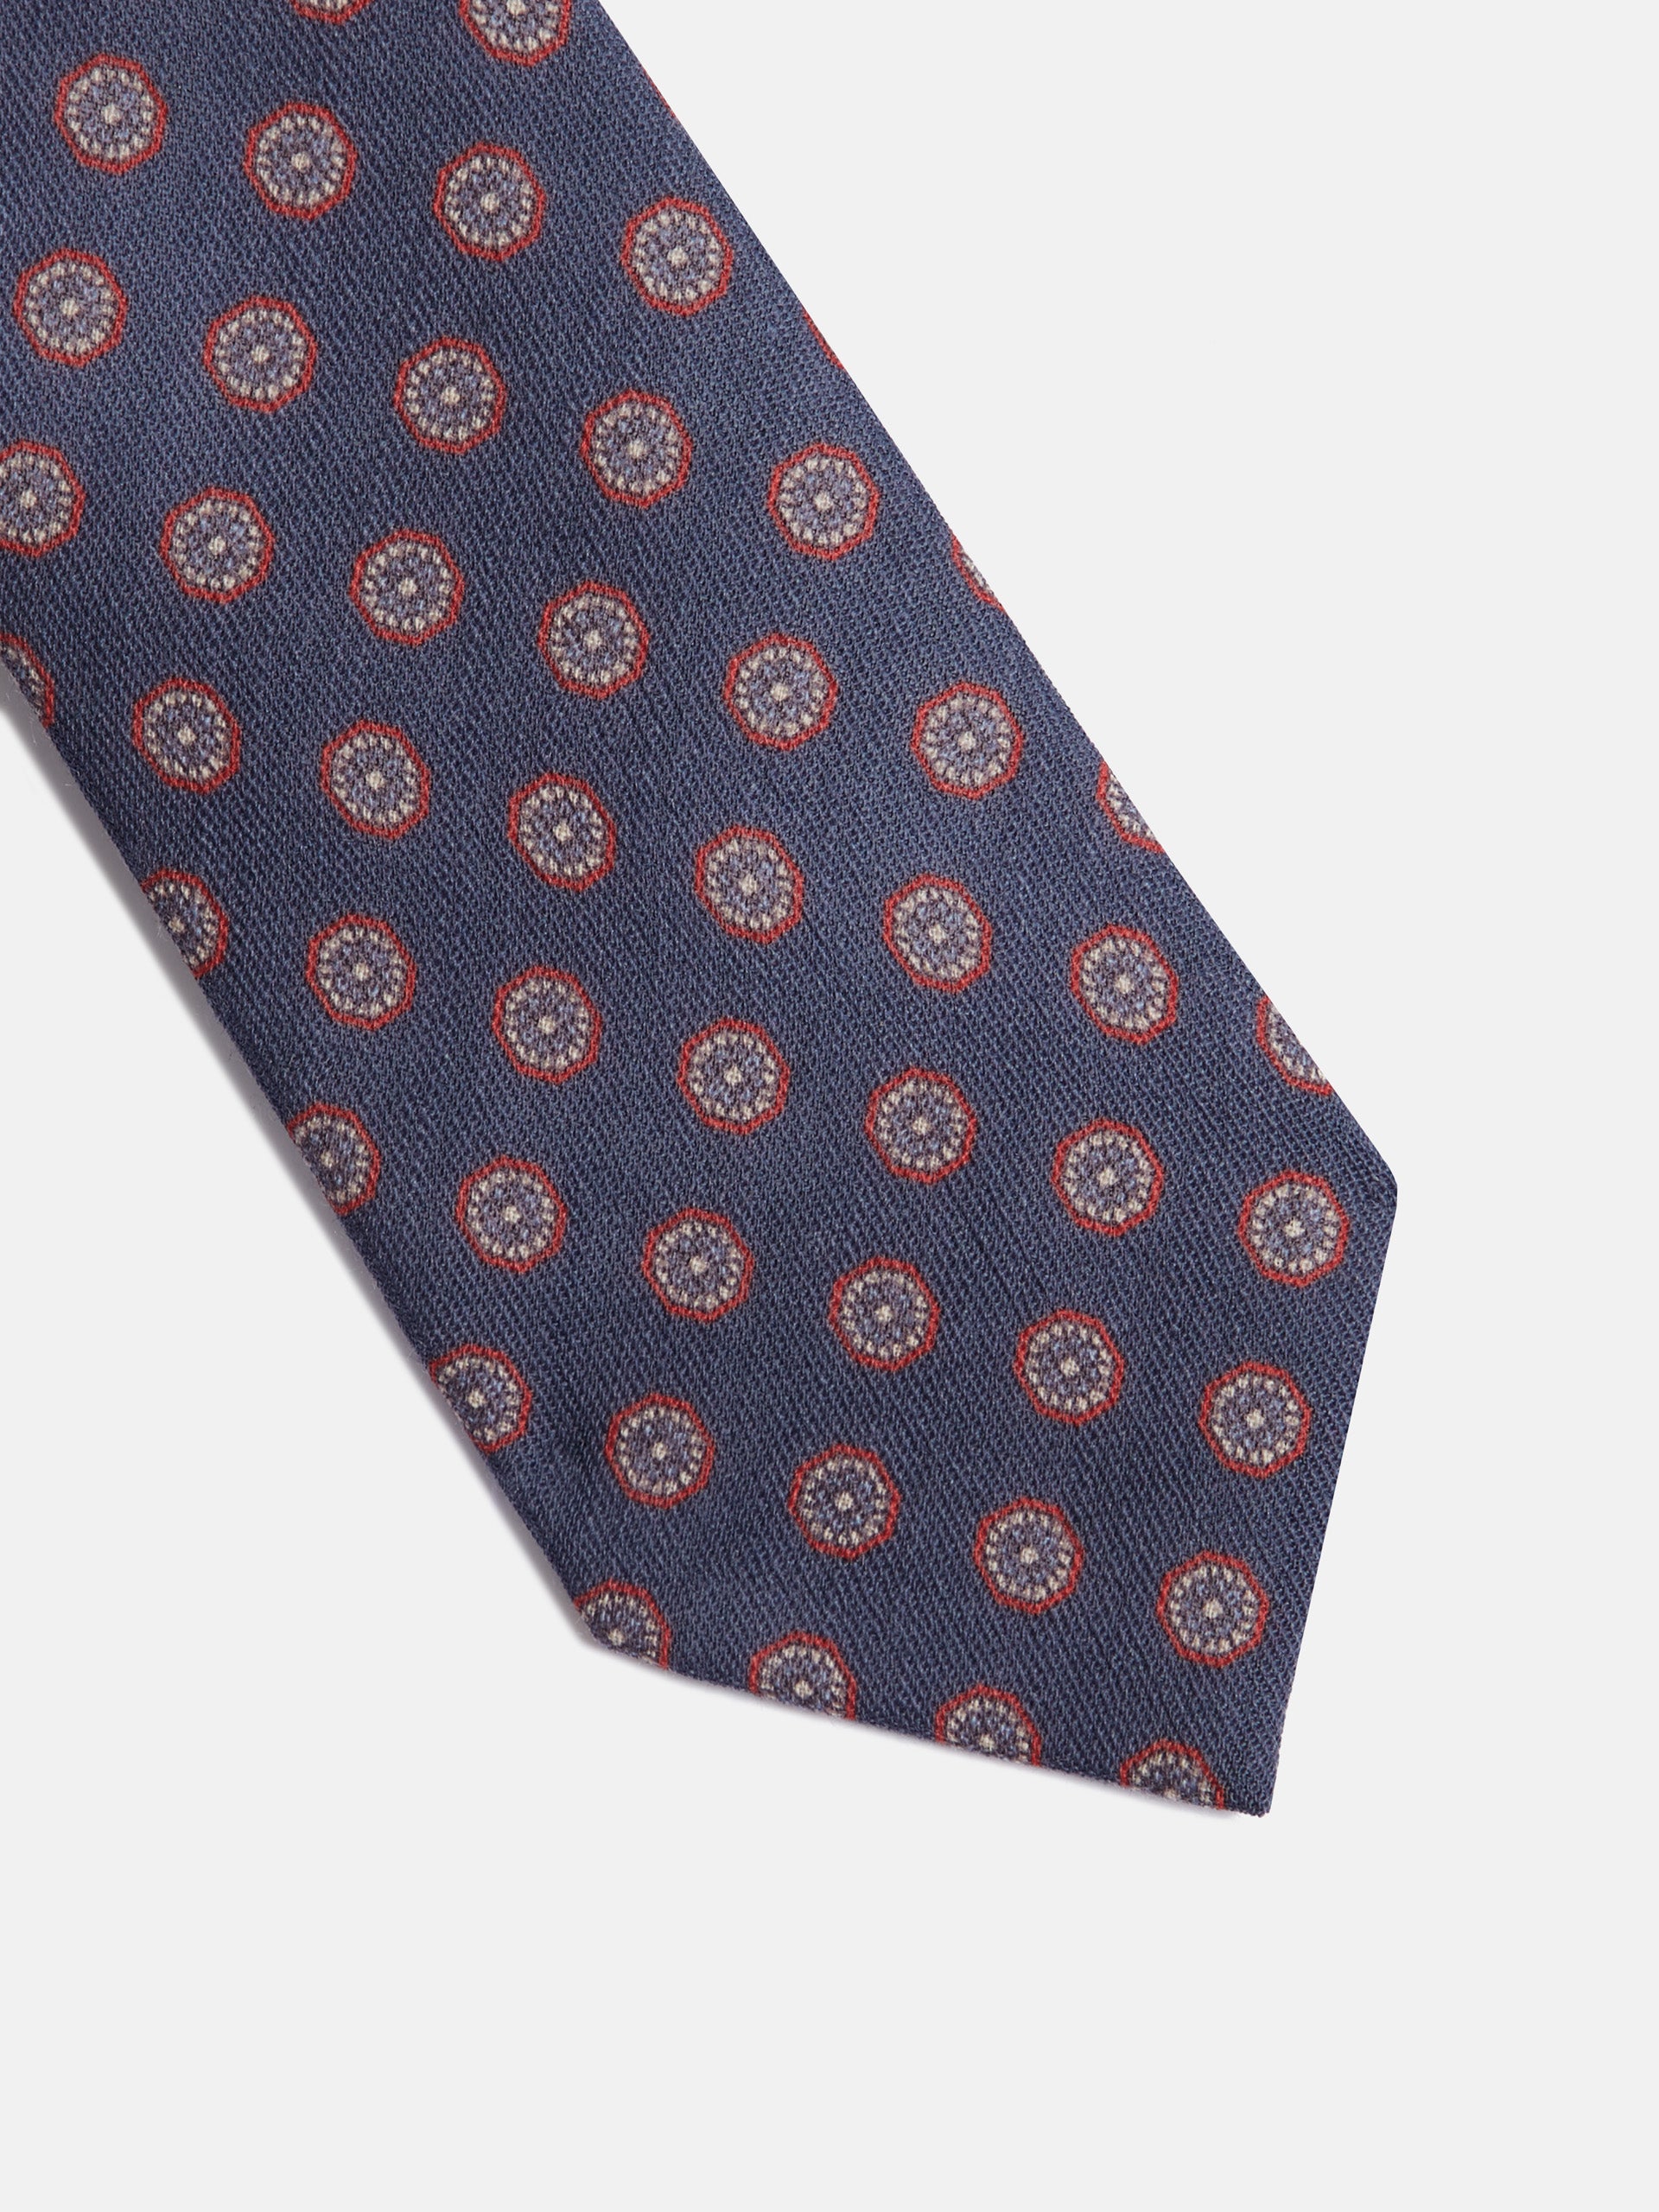 Navy blue printed geometric tie